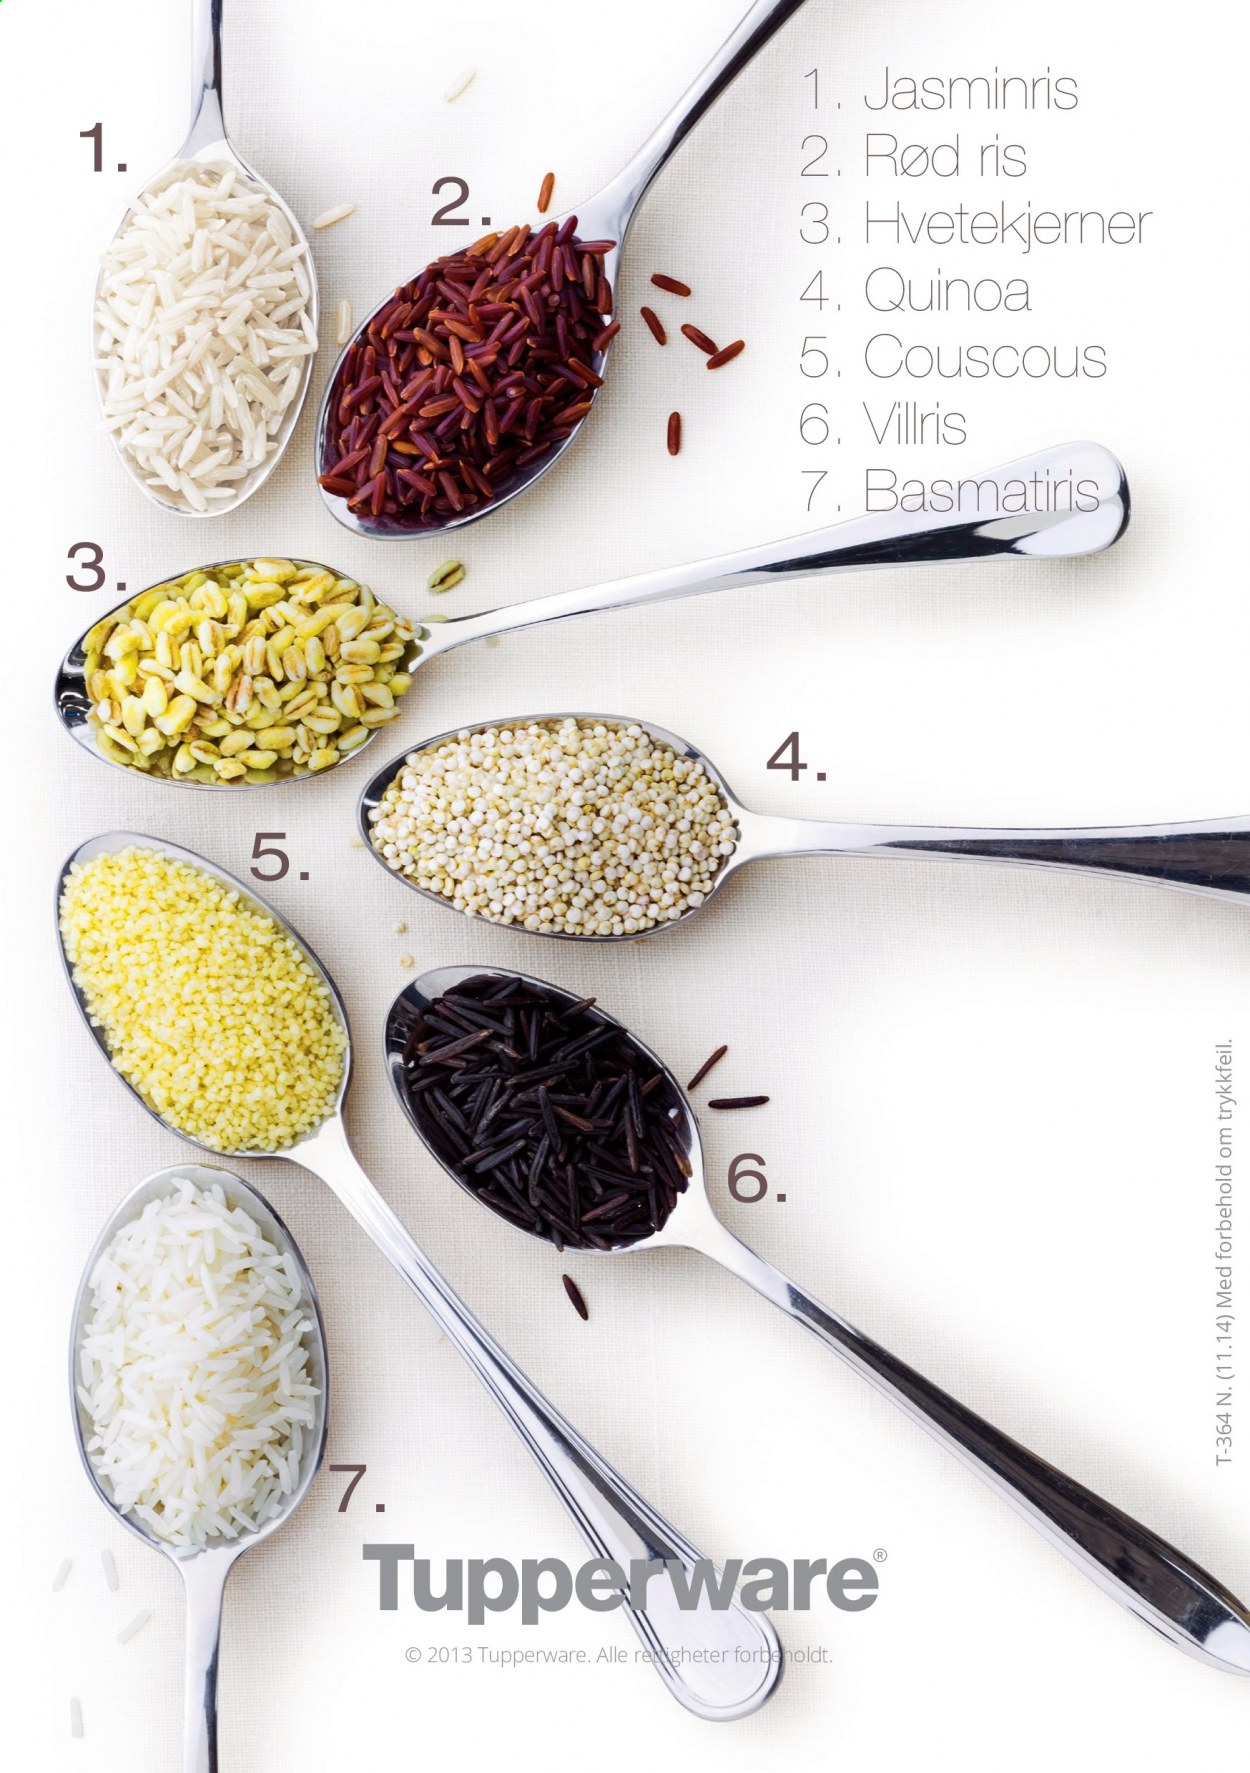 Kundeavis Tupperware - Produkter fra tilbudsaviser - basmatiris, jasminris, quinoa, ris, couscous. Side 12.